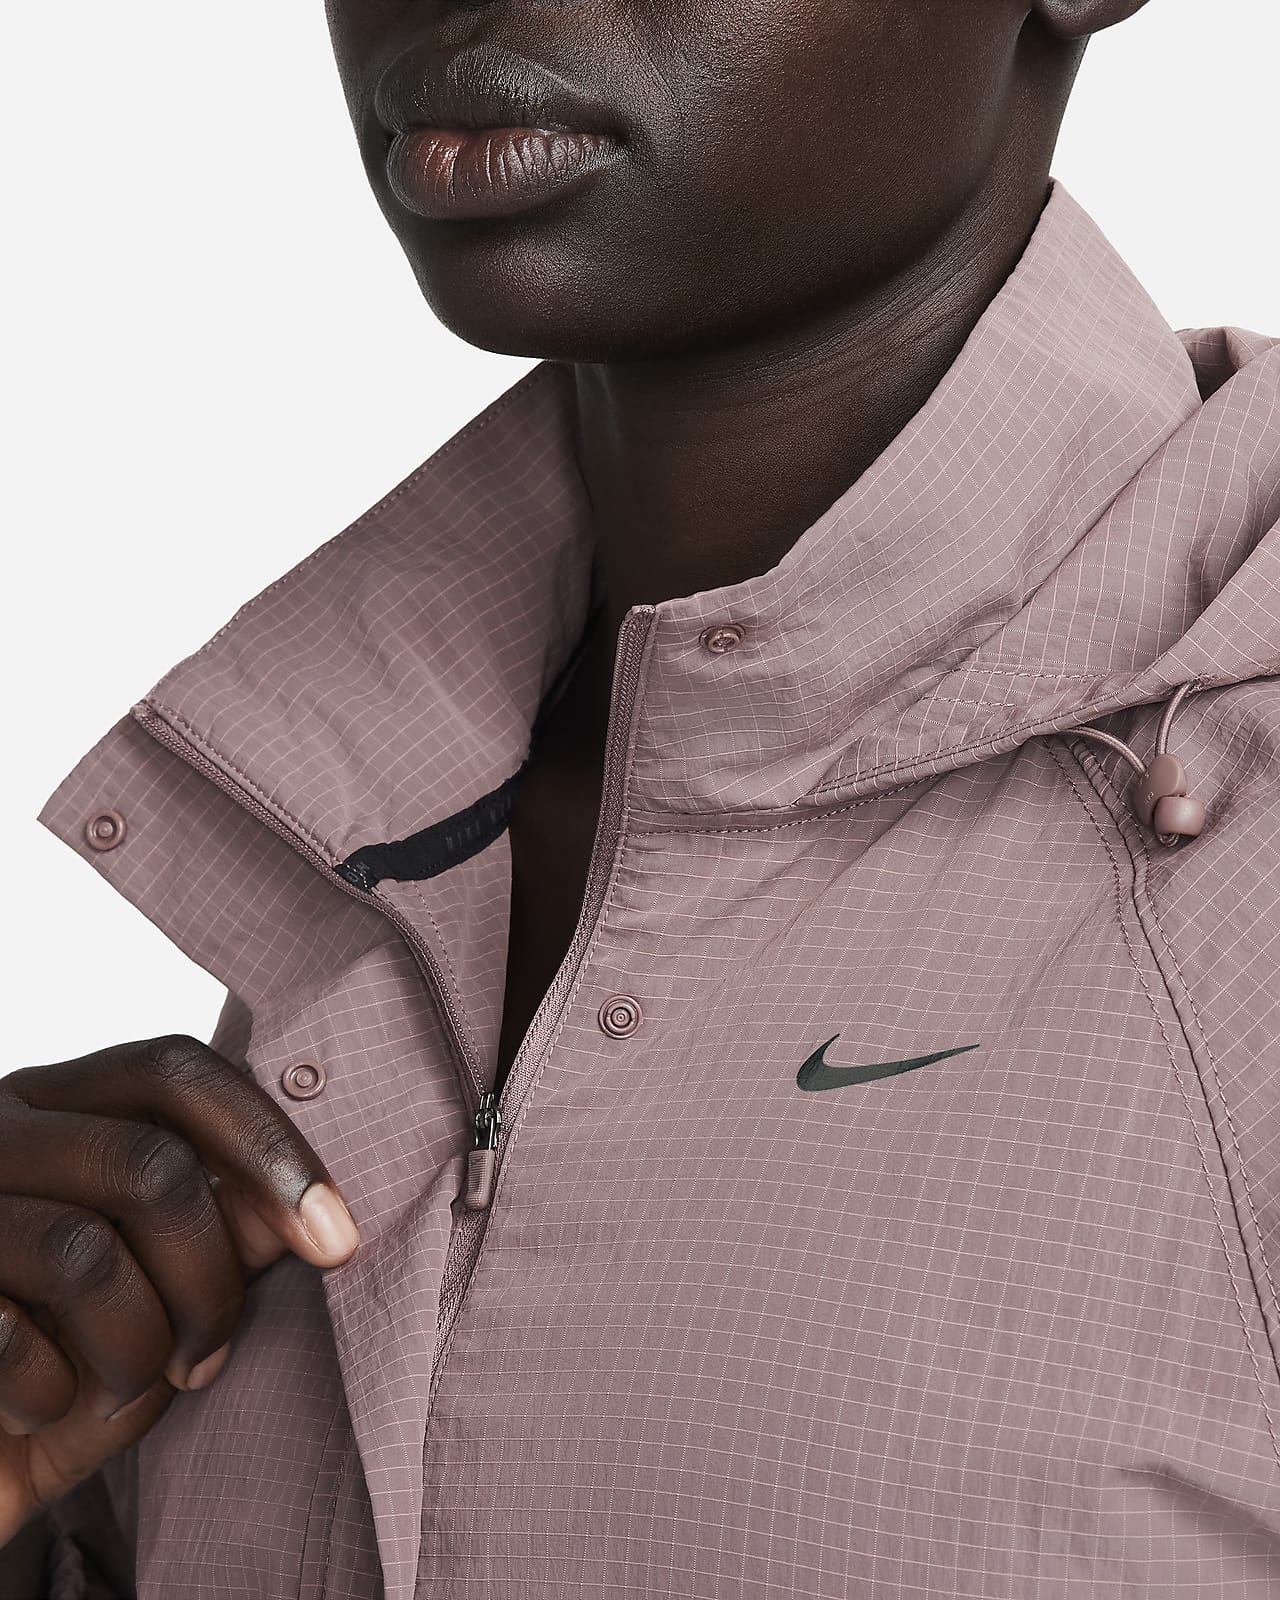 Nike Running Division Women's Repel Jacket.